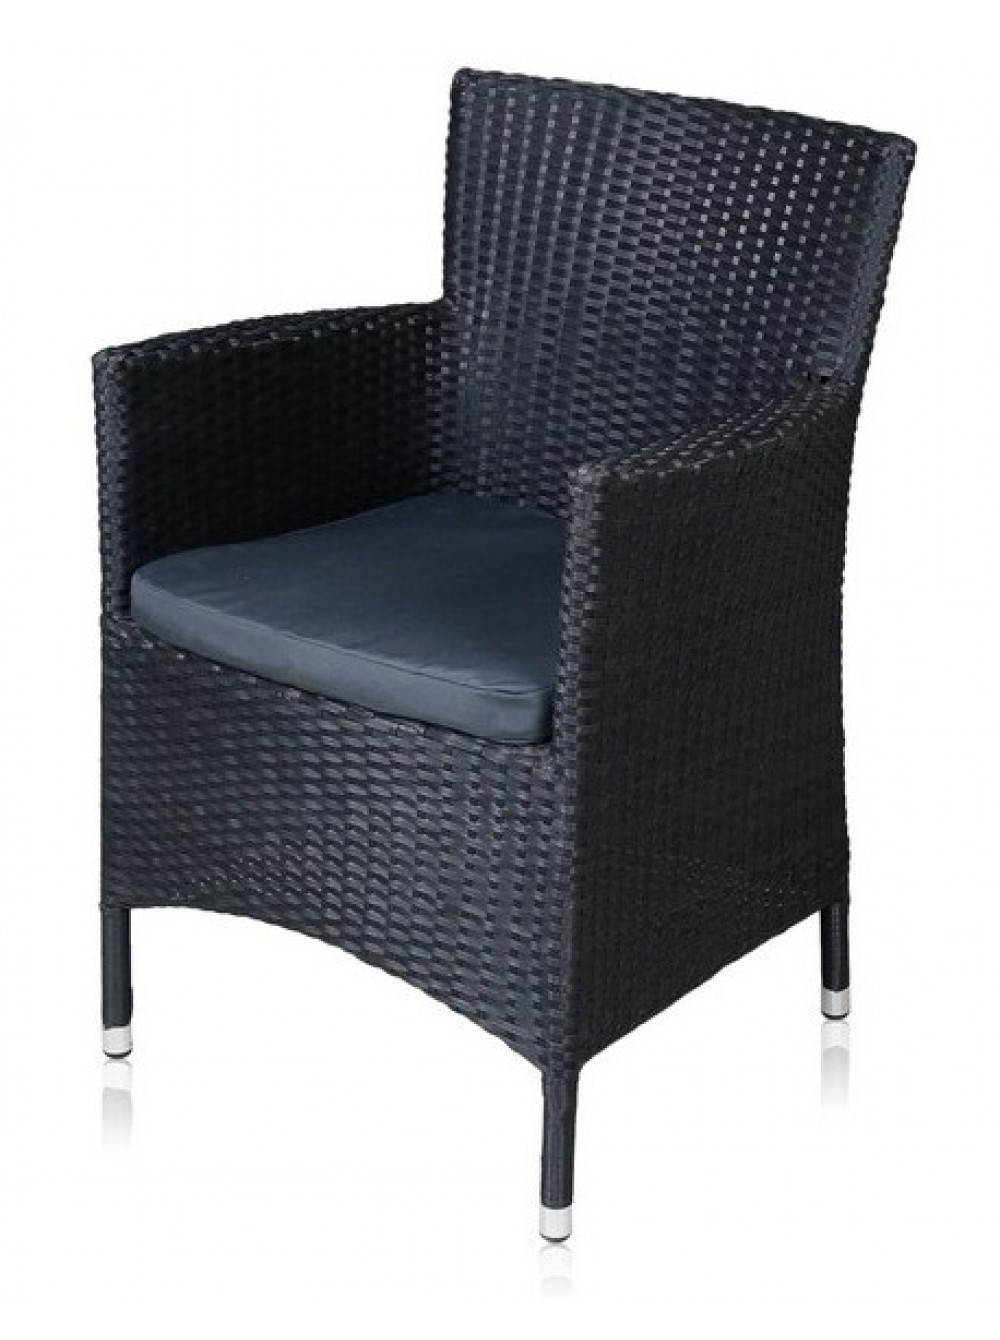 Кресло Афина-мебель y97a Black